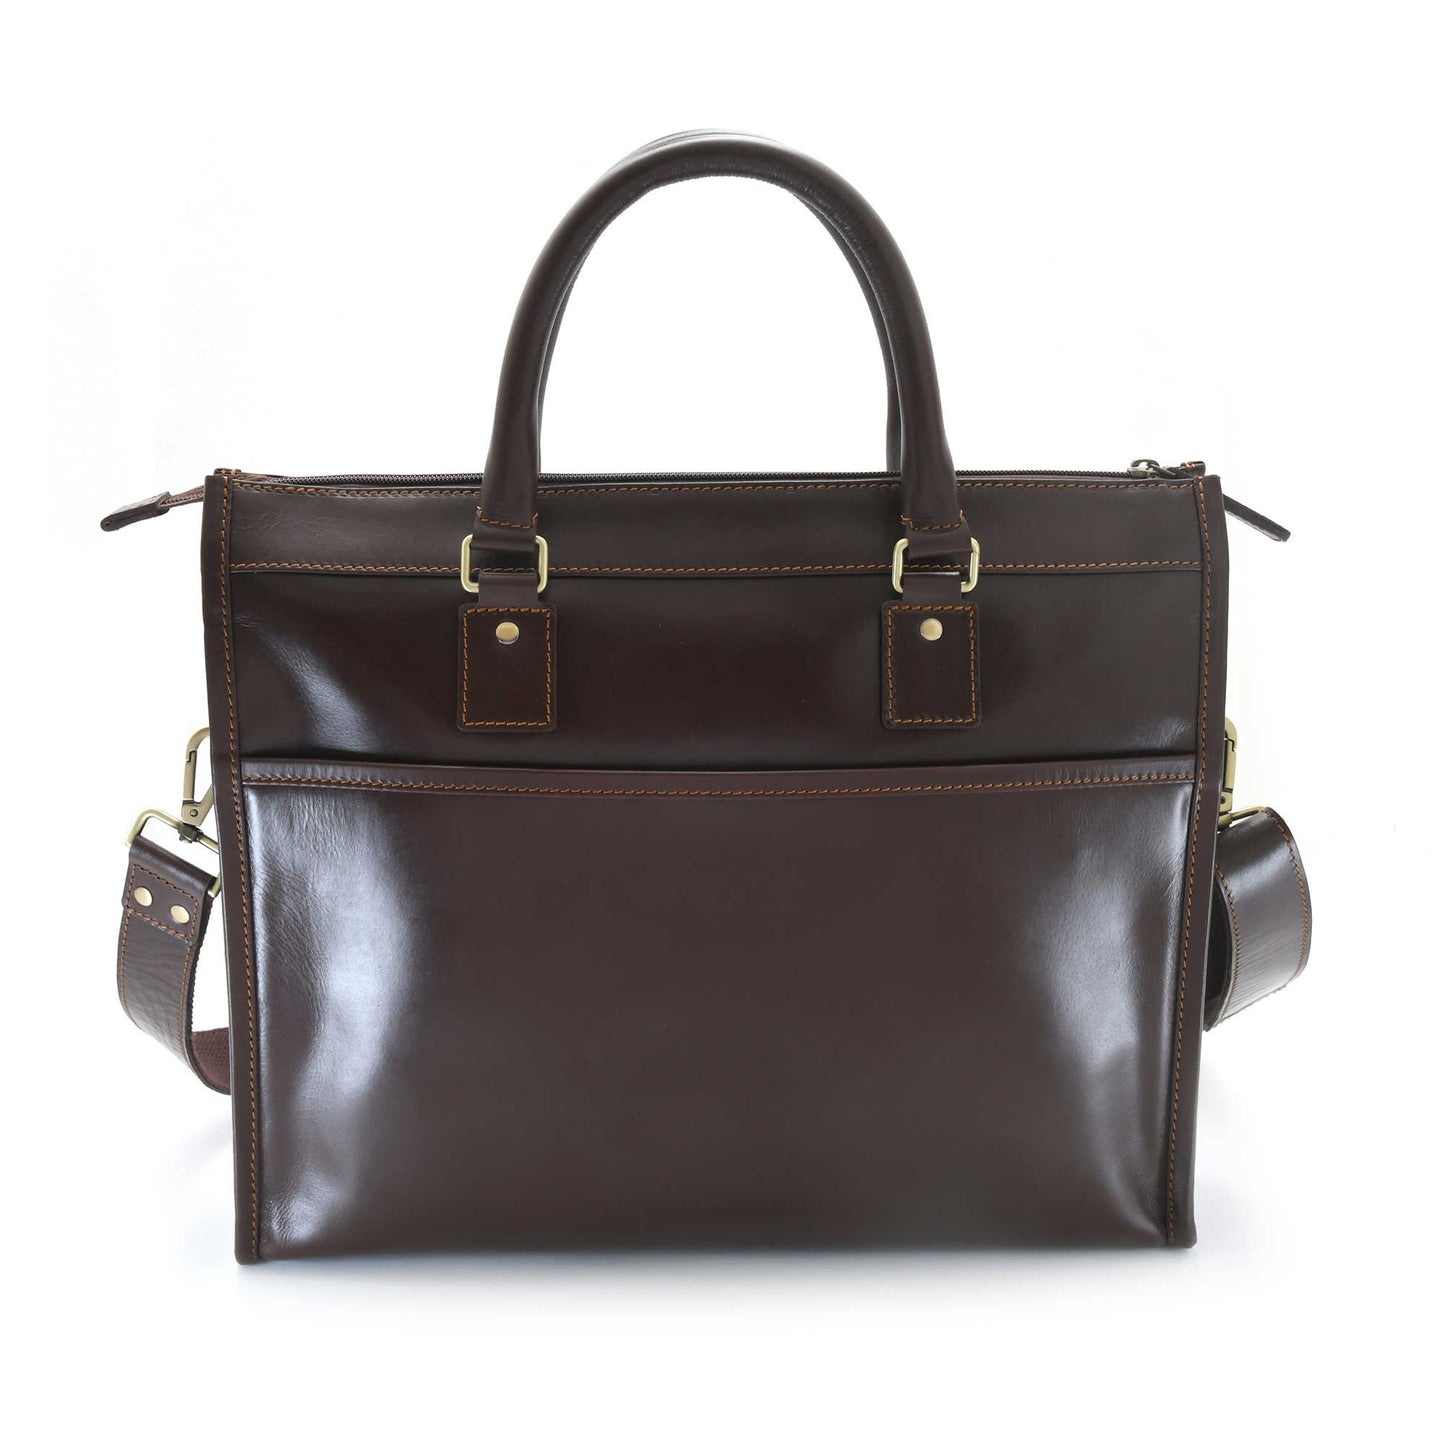 Style n Craft 392008 Men's Portfolio Briefcase Bag in Full Grain Dark Brown Leather - Back View showing the Slip Pocket